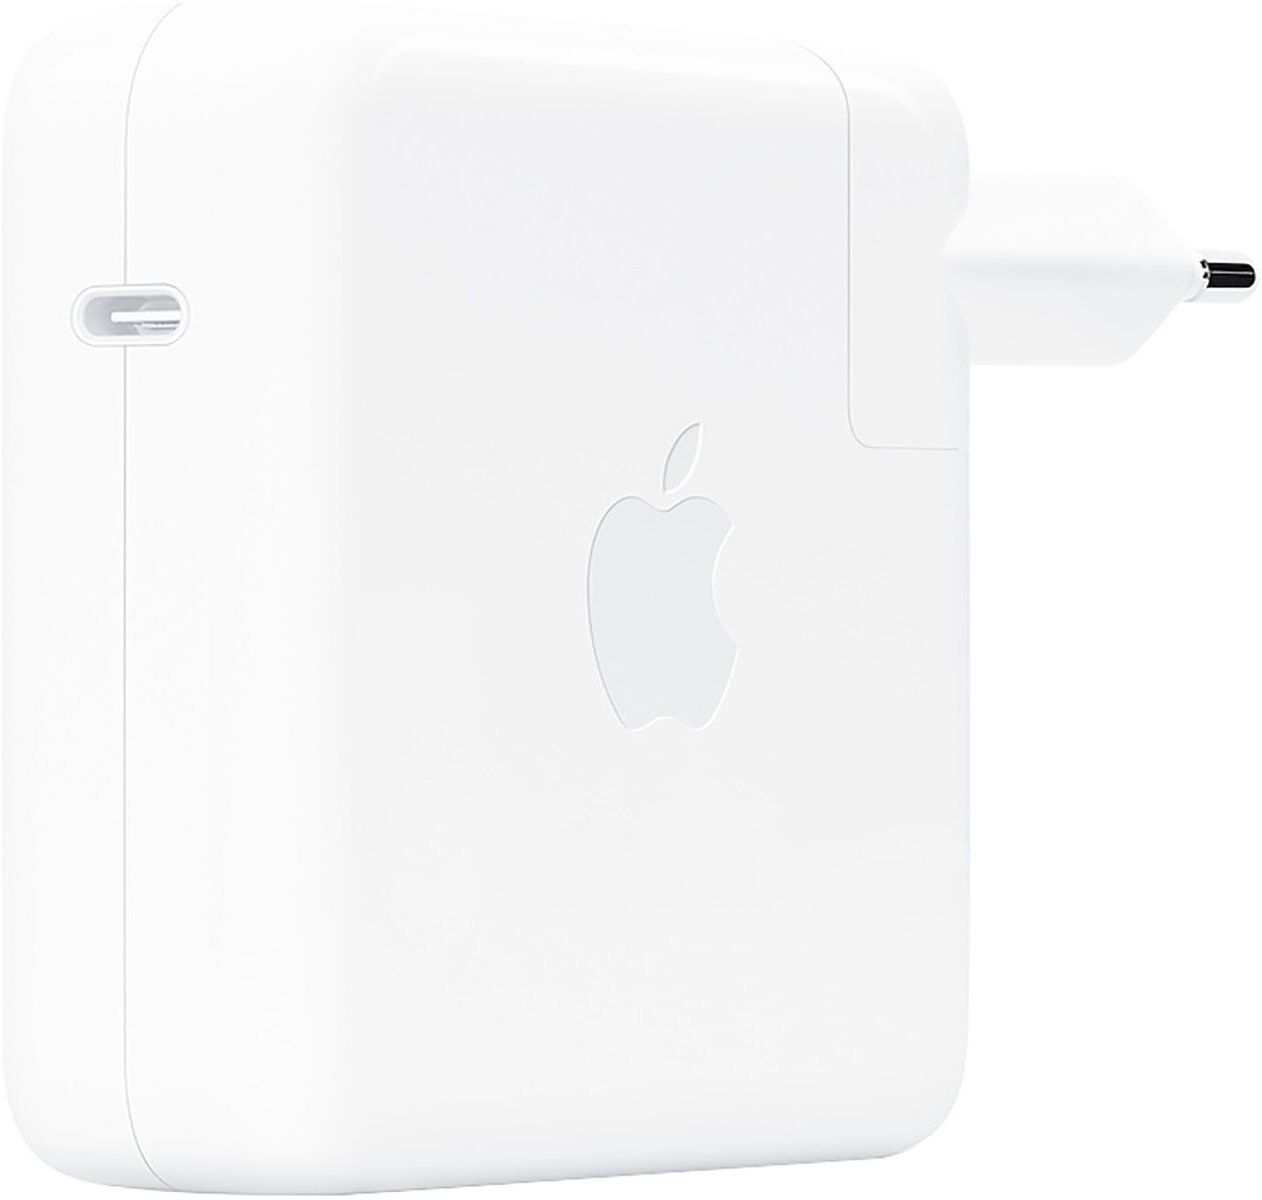 Apple USB-C мощностью 96 Вт (белый) - фото №2